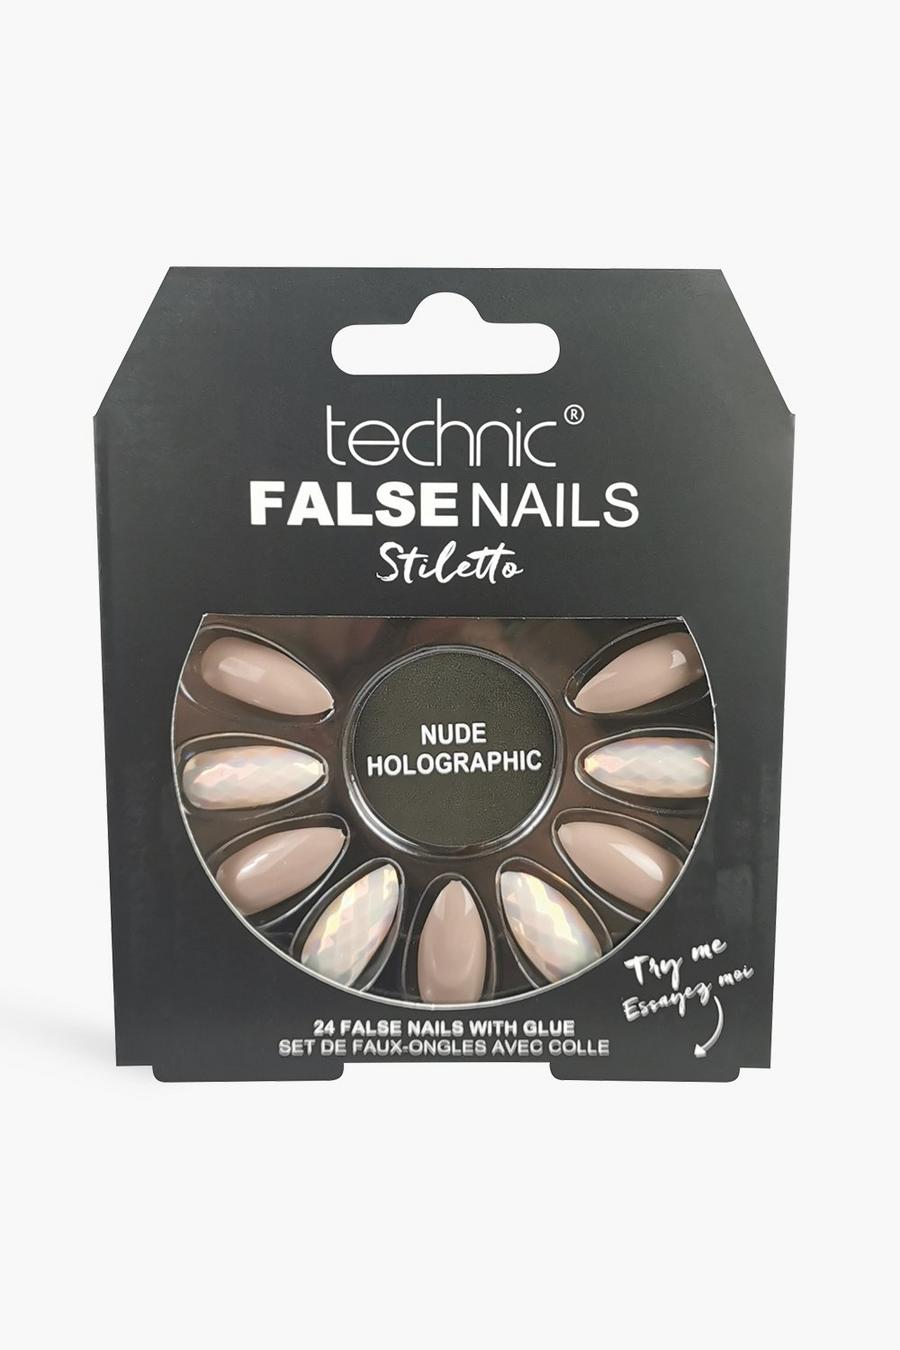 Technic False Nails-stiletto Nude Holographic image number 1